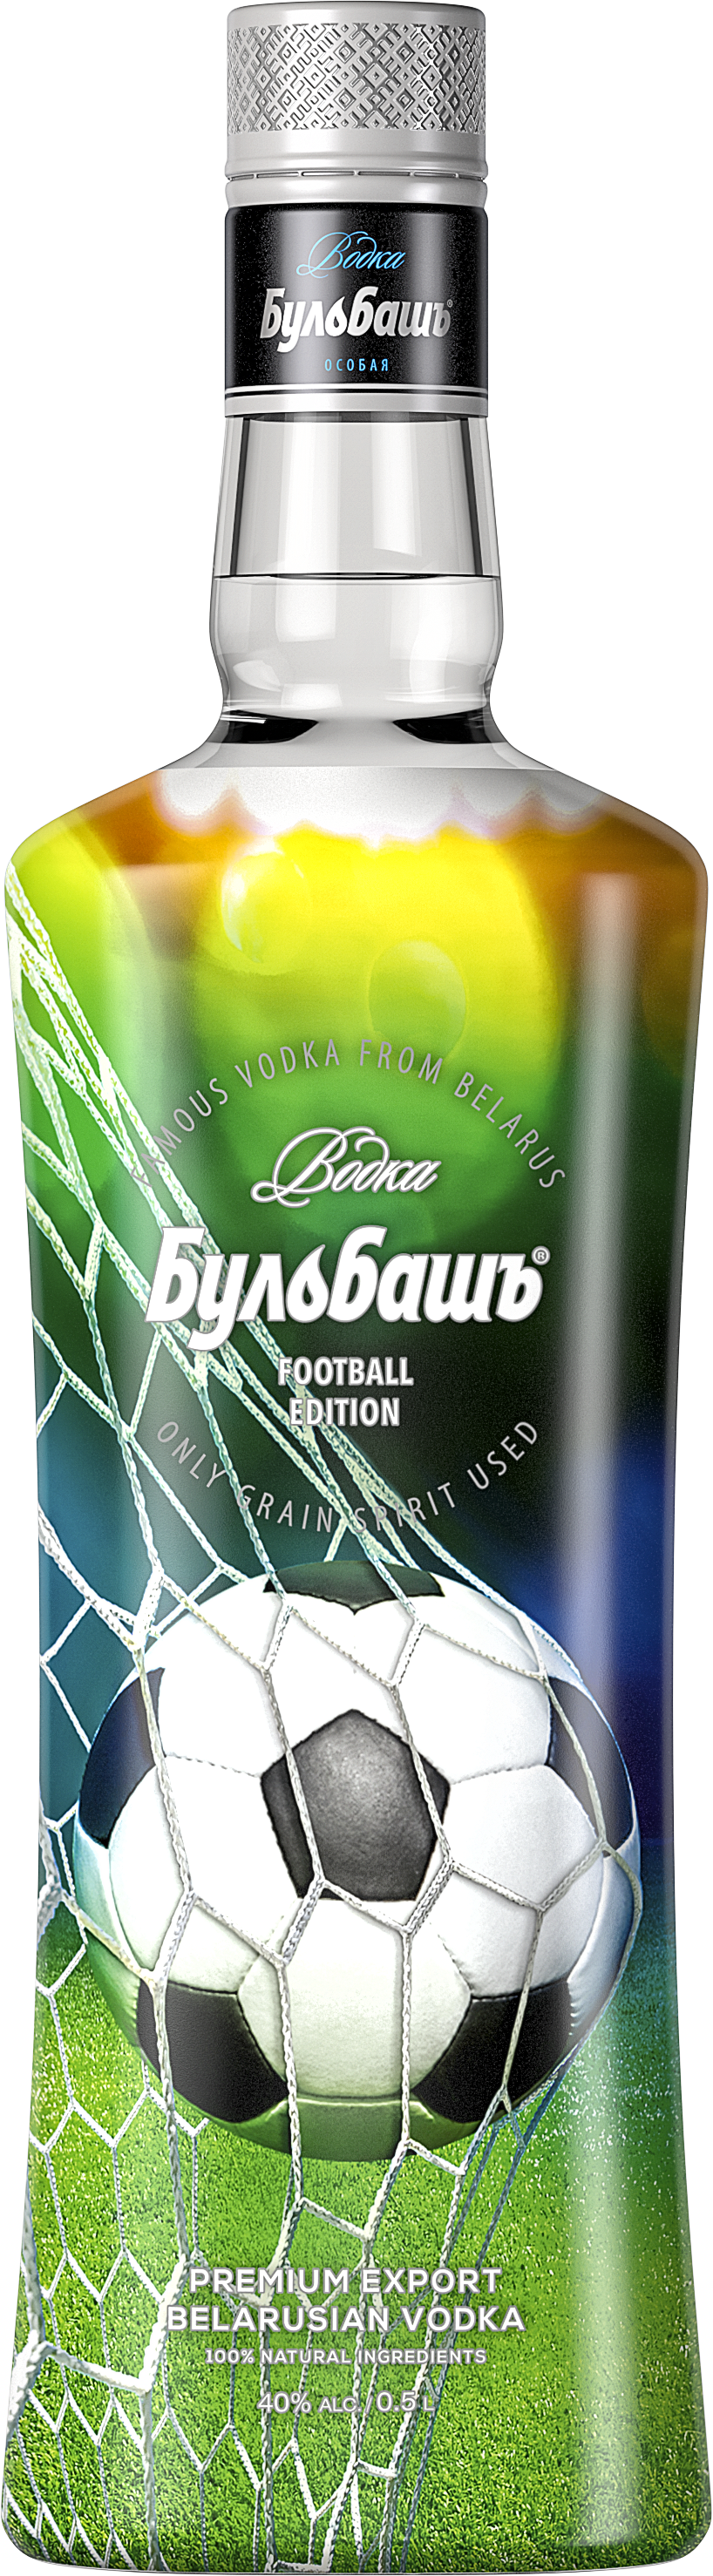 Бульбашъ® Football Edition 2018